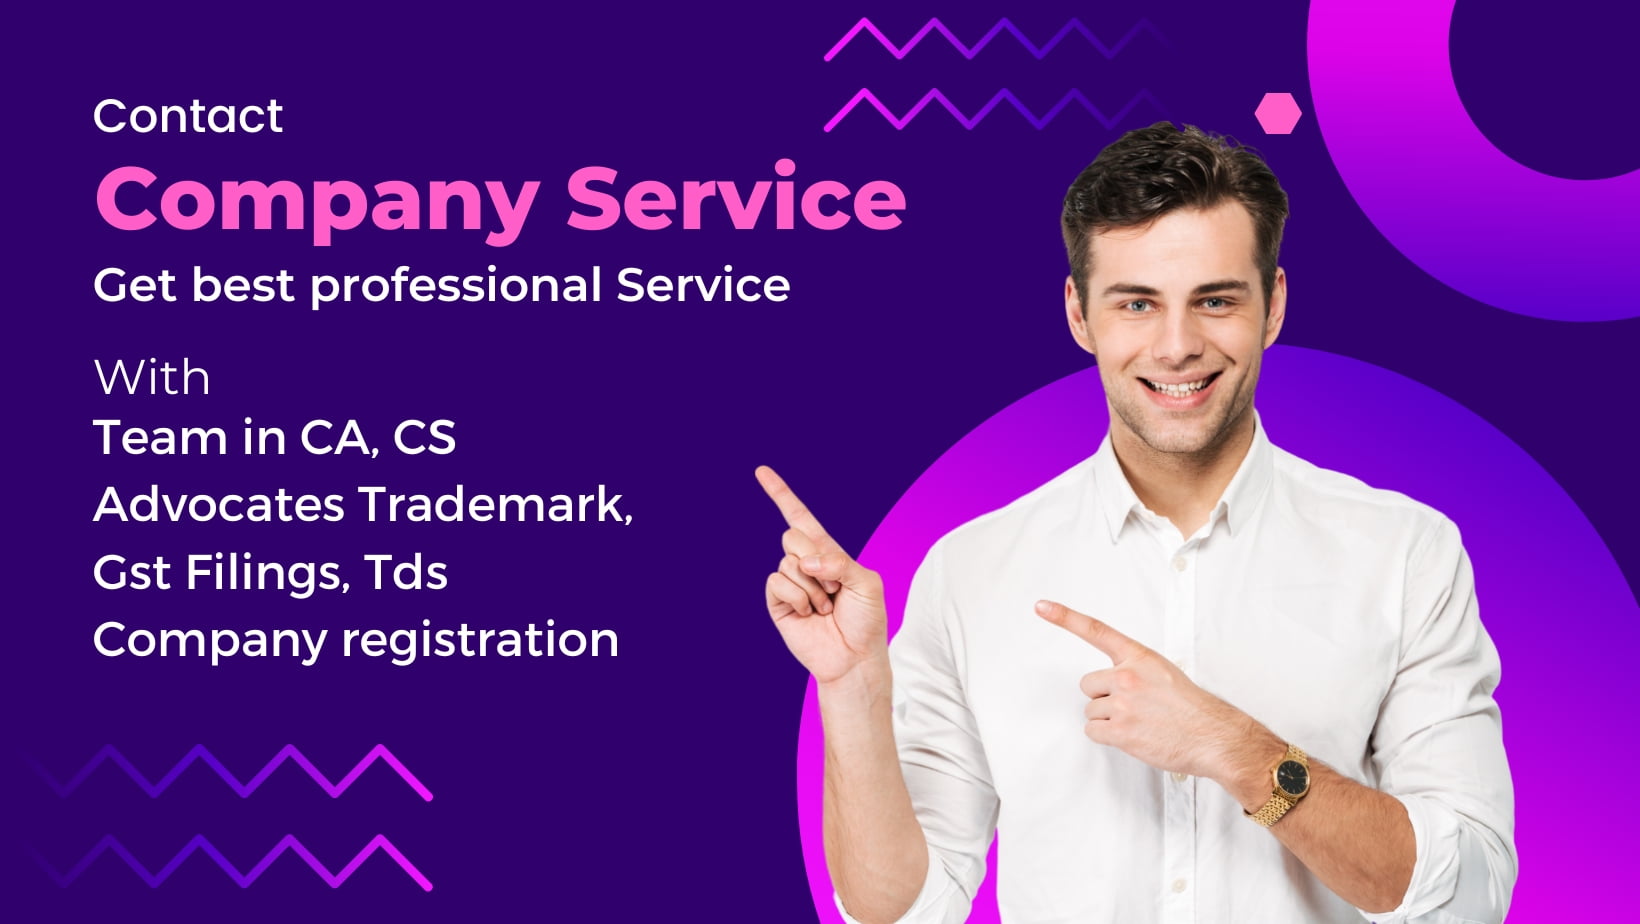 Contact company Services